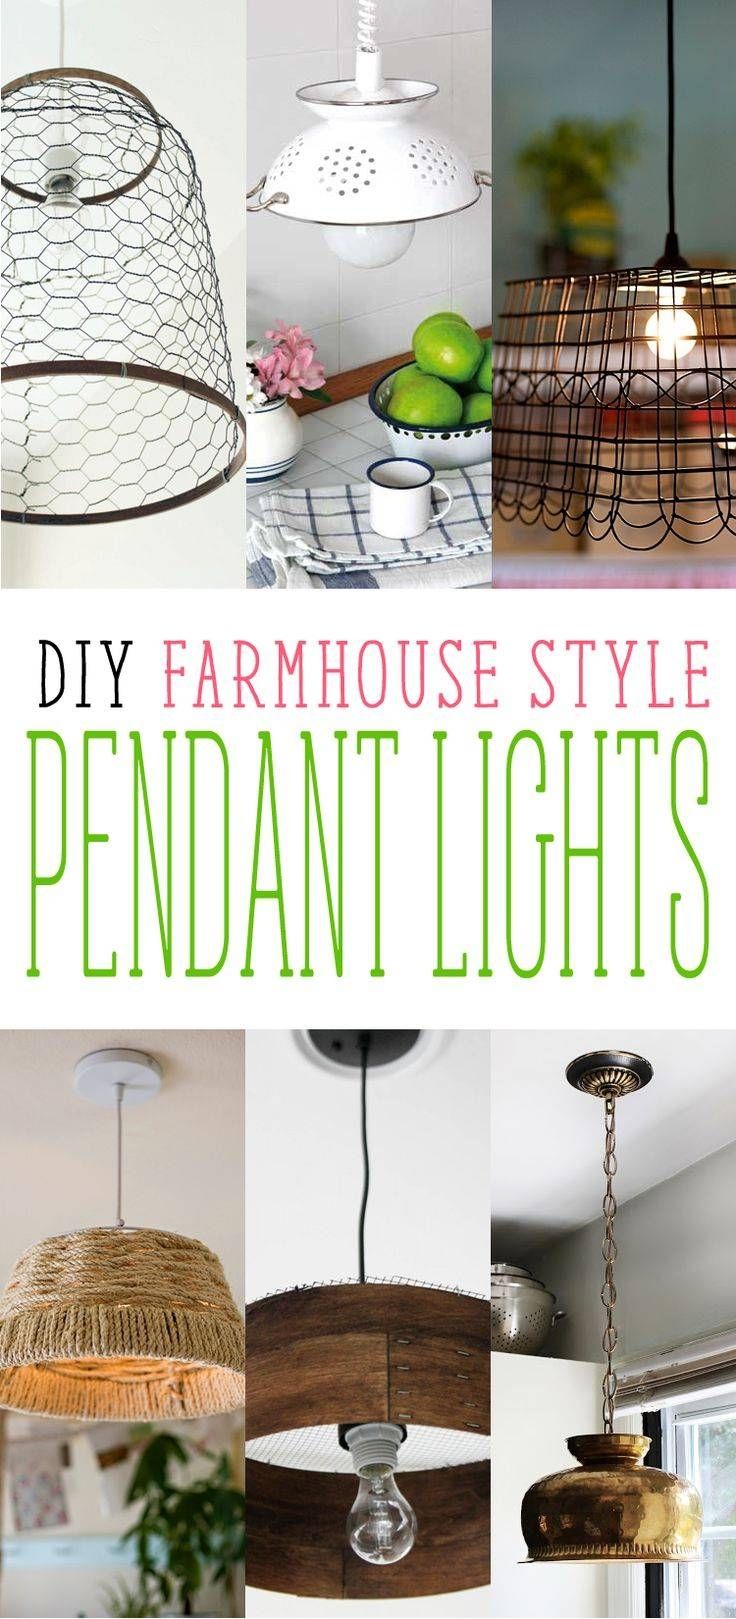 Best 25+ Diy Pendant Light Ideas Only On Pinterest | Hanging Throughout Diy Pendant Lights (Photo 11 of 15)